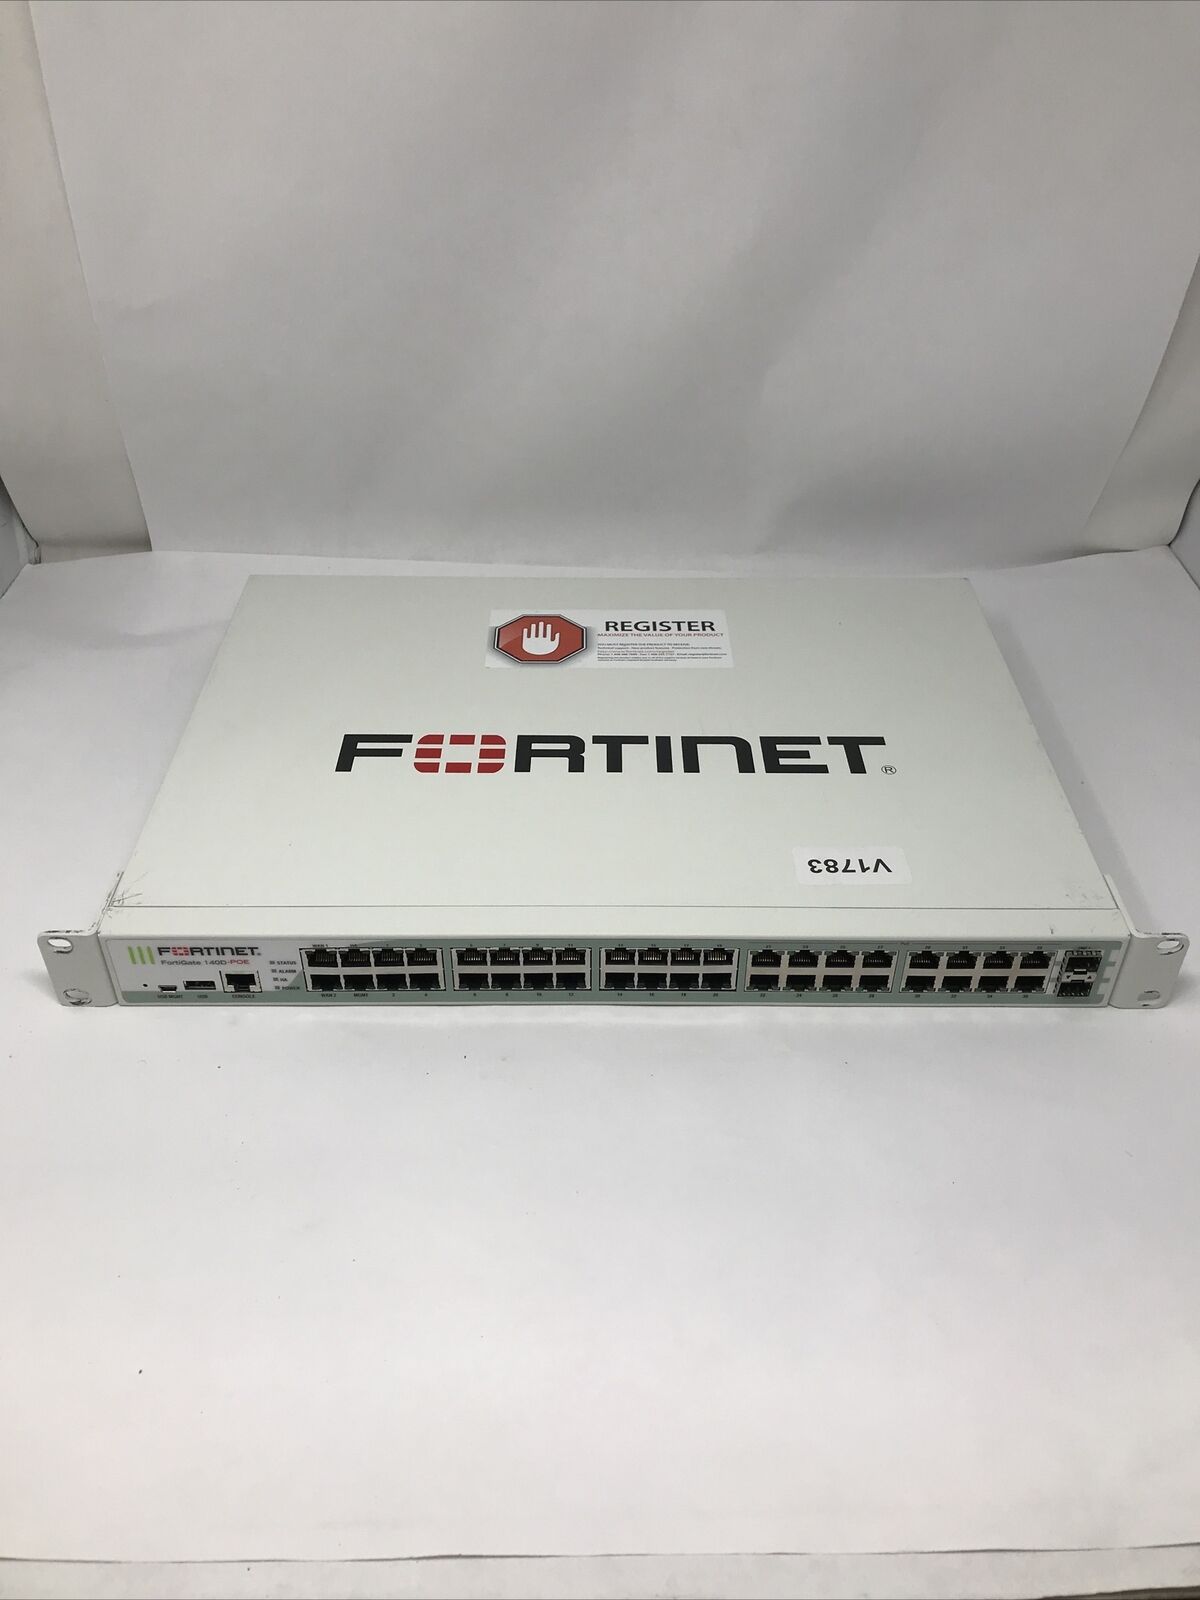 Fortinet FG-140D-POE Fortigate 36-Port SSL POE Firewall